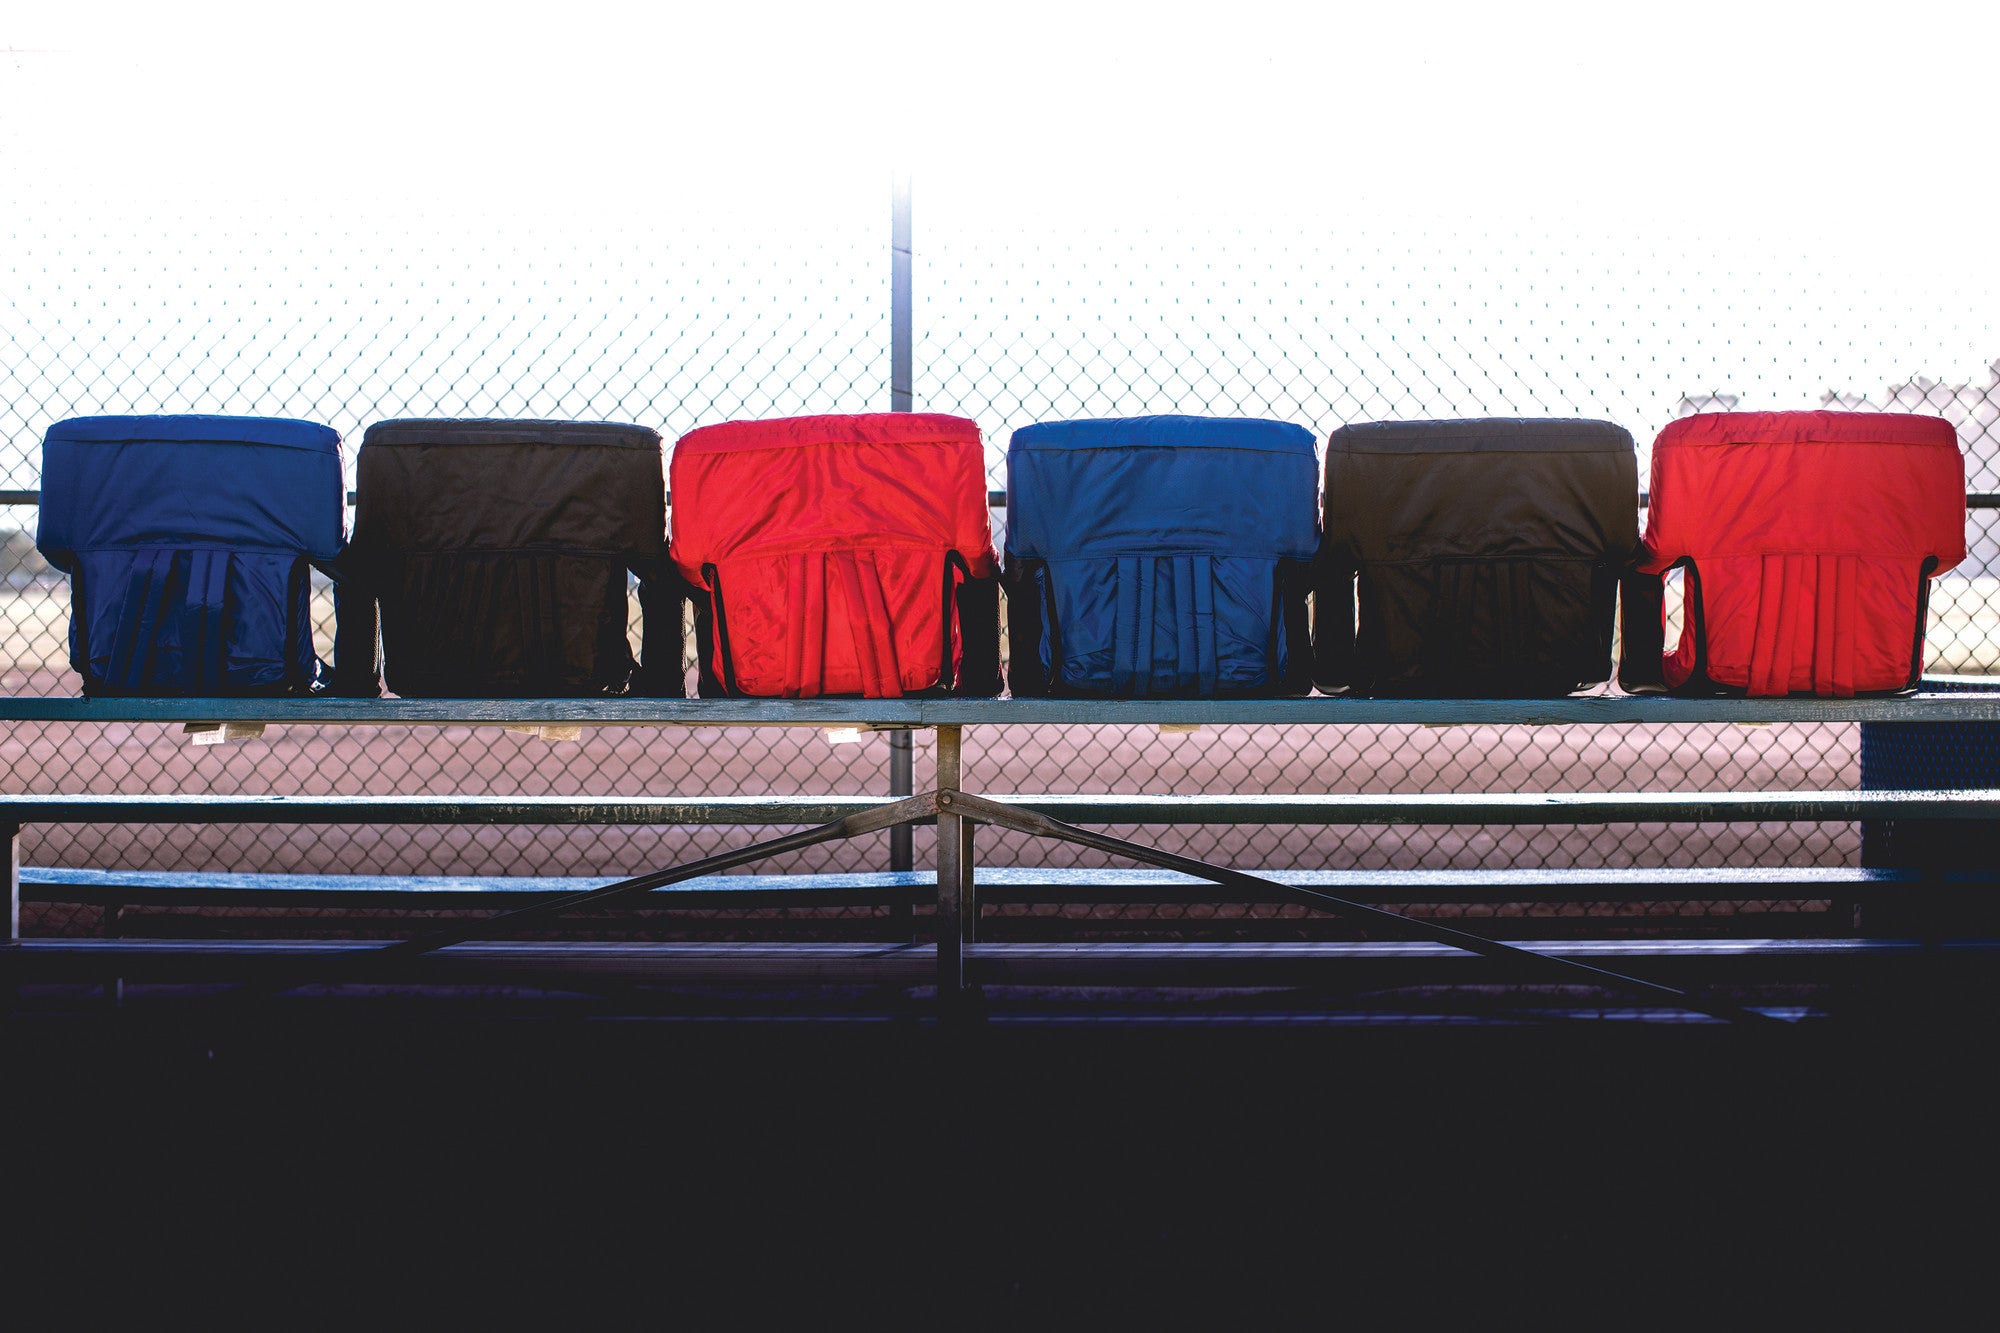 Baylor Bears - Ventura Portable Reclining Stadium Seat